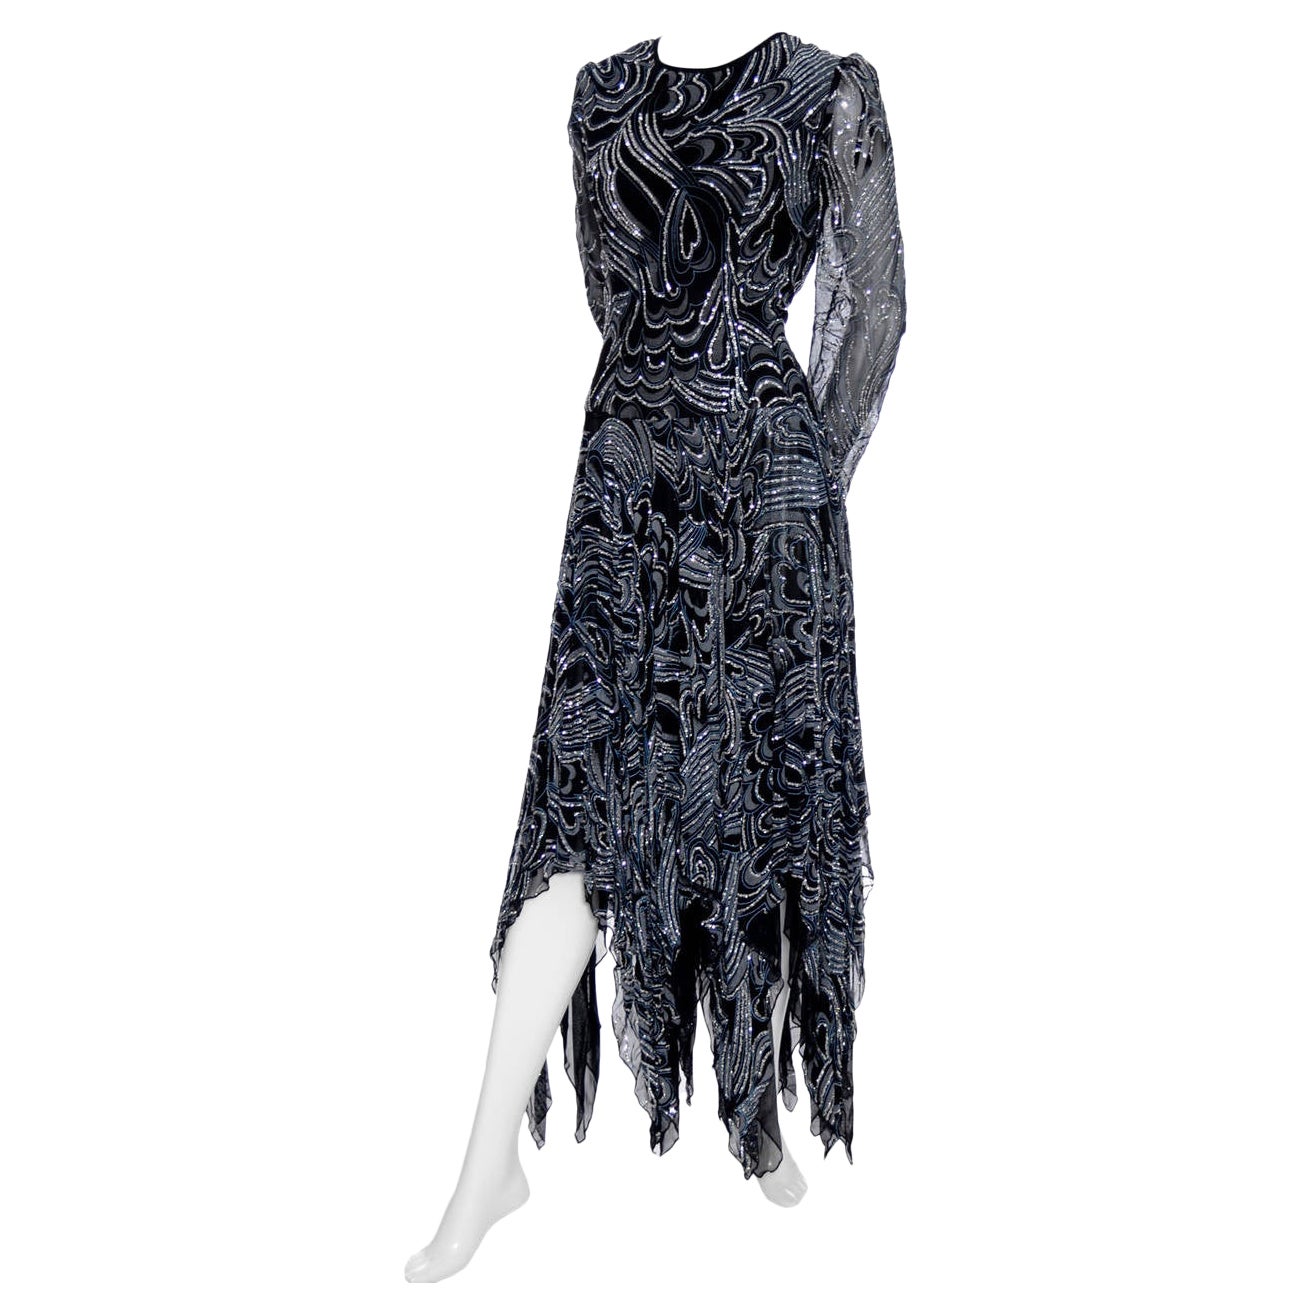 1980s Terence Nolder Vintage Dress w Handkerchief Hem in Metallic Sparkle Fabric For Sale